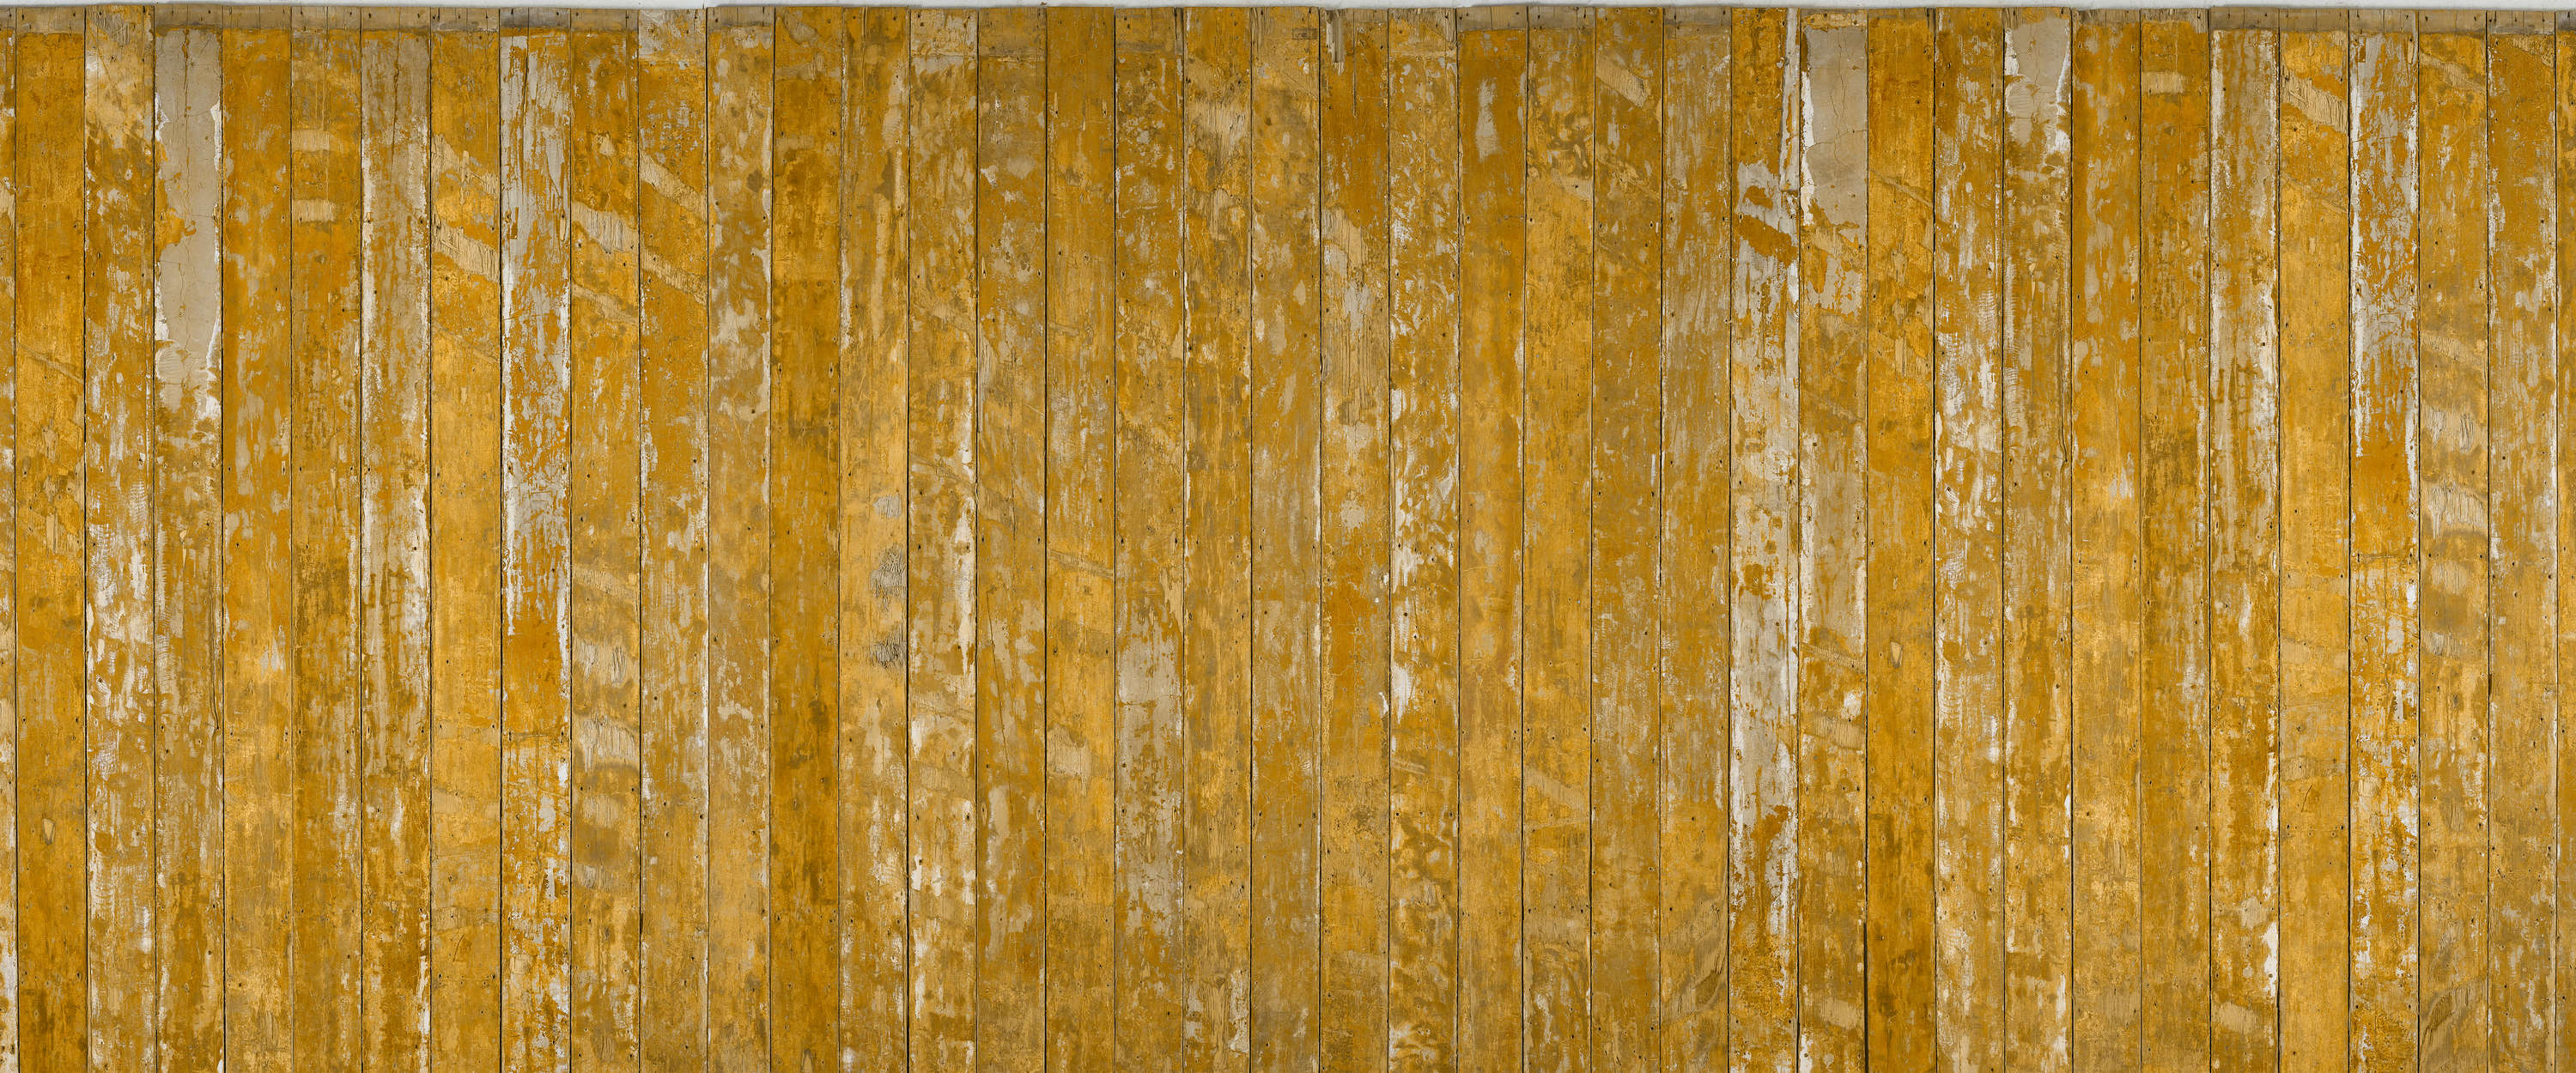             Tablones de madera papel pintado amarillo con aspecto de madera usada
        